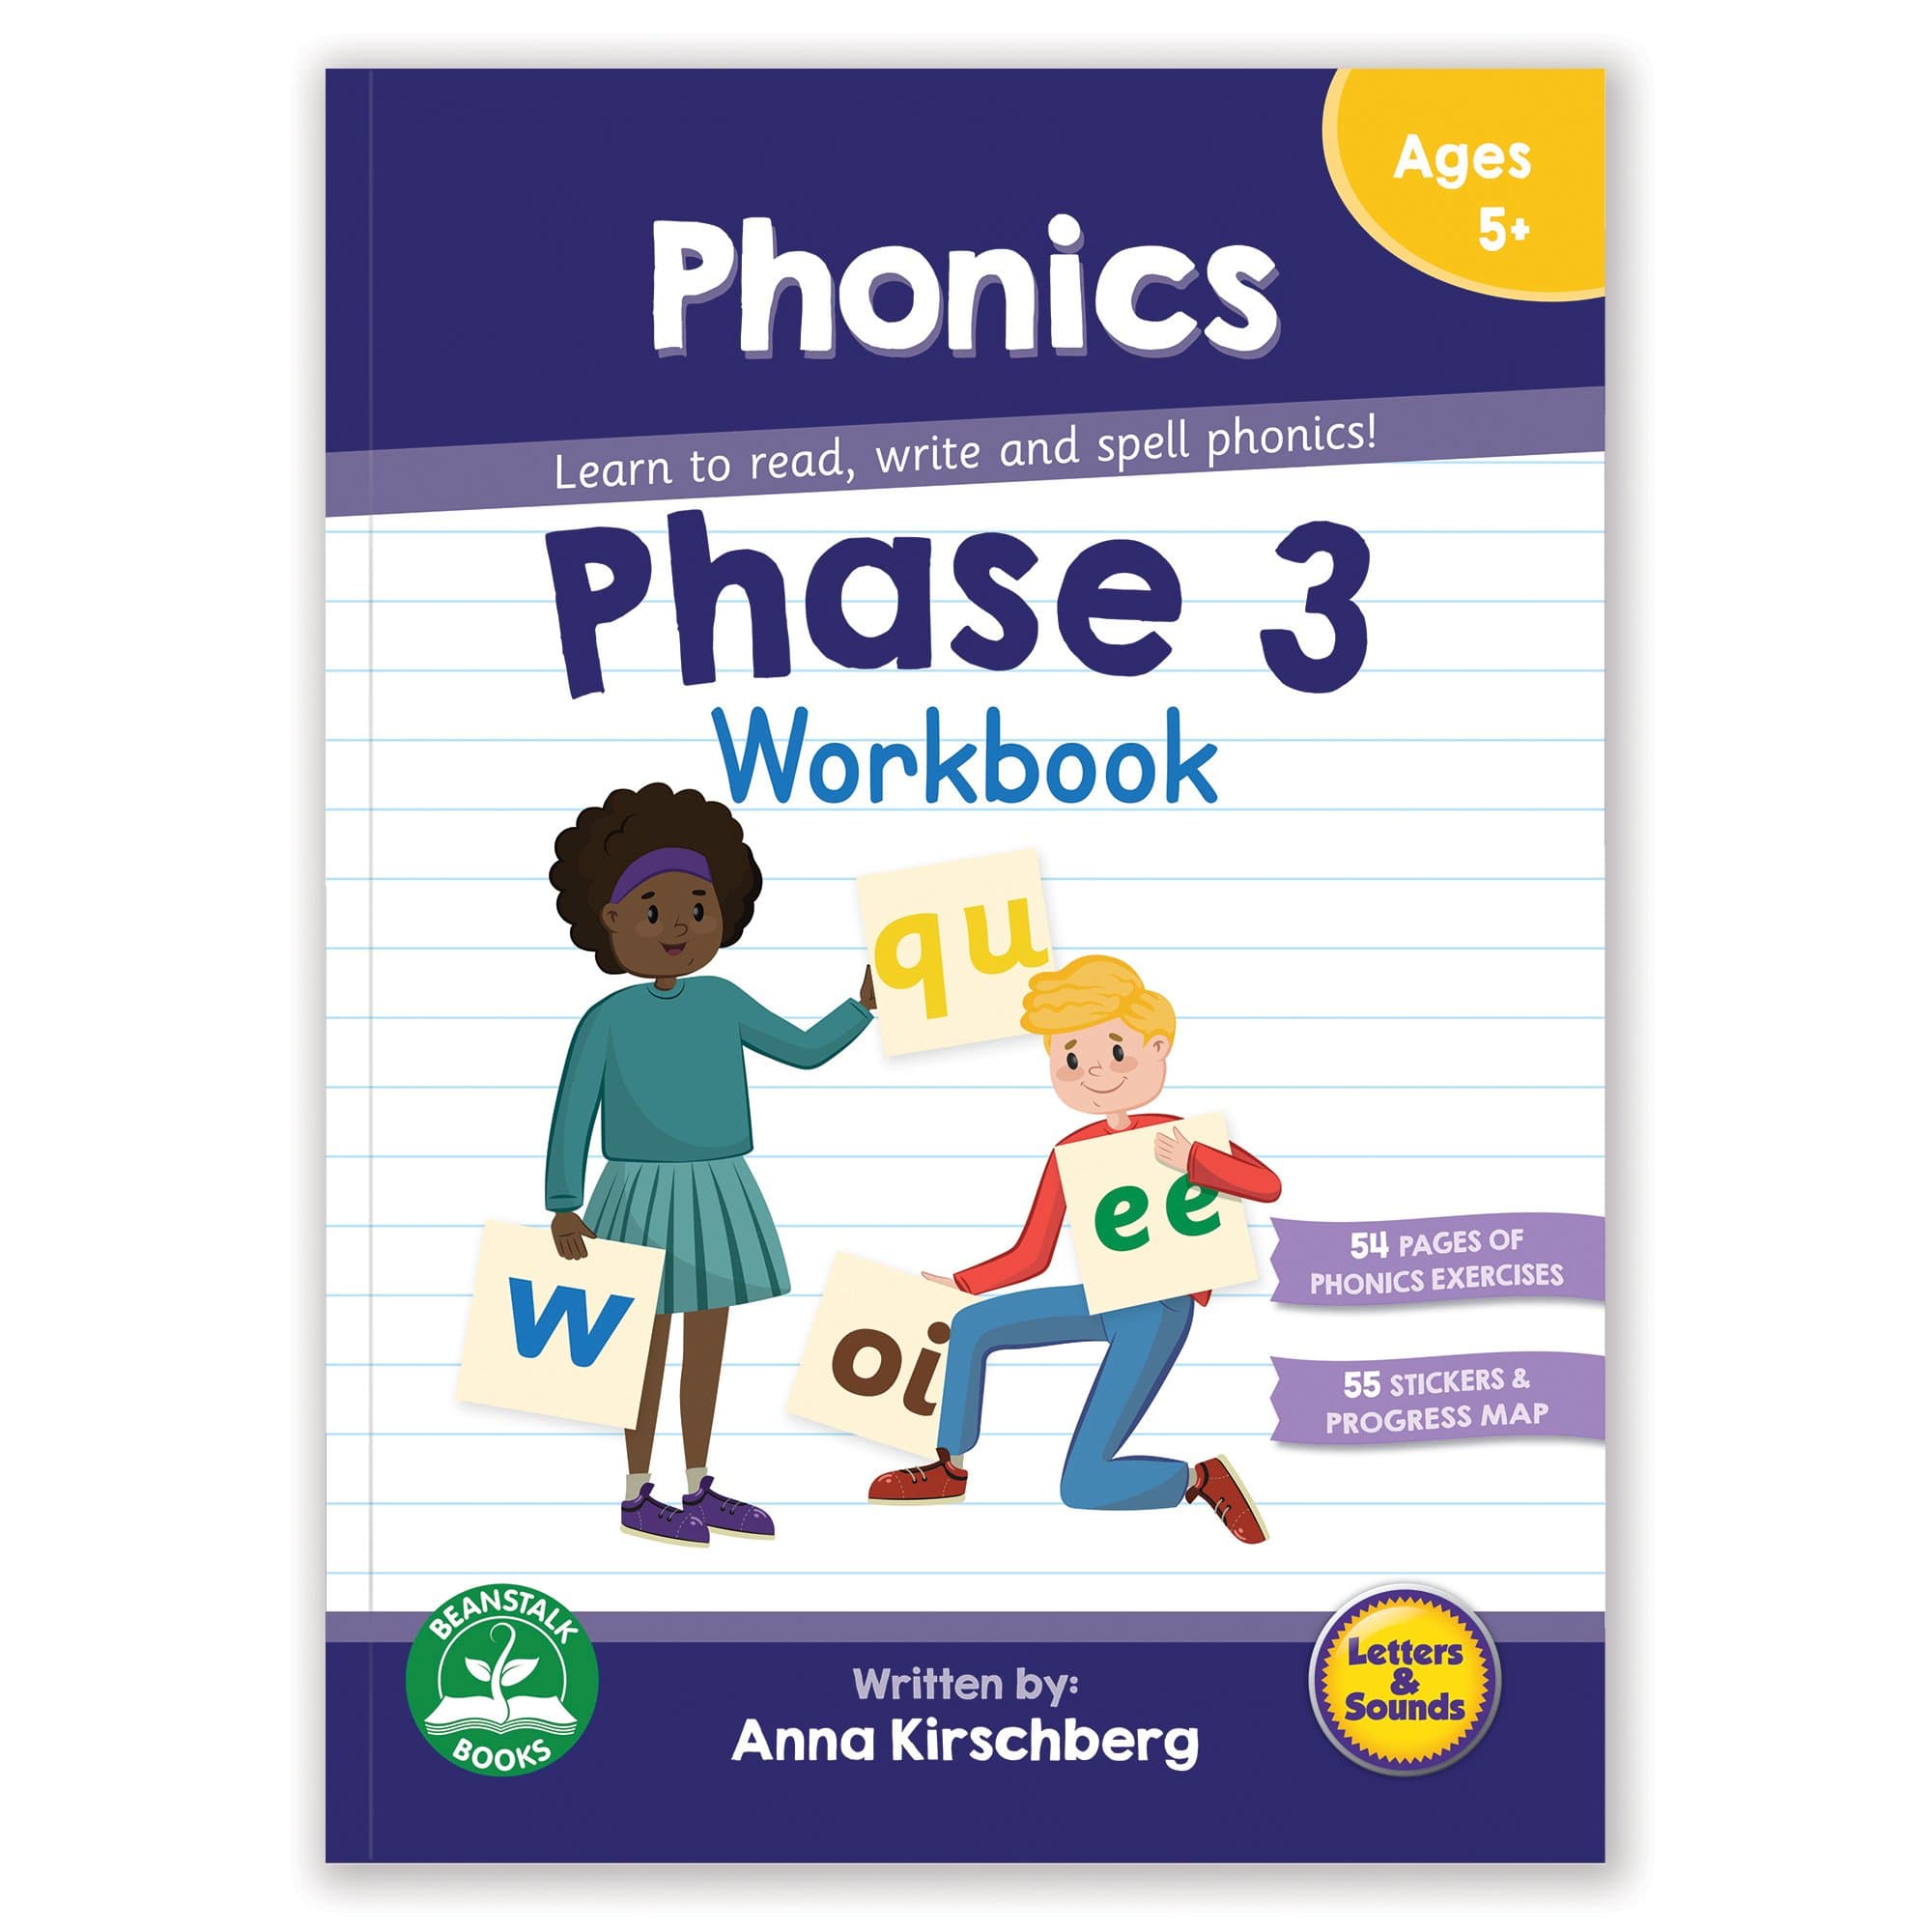 Phase 3 Phonics Workbook